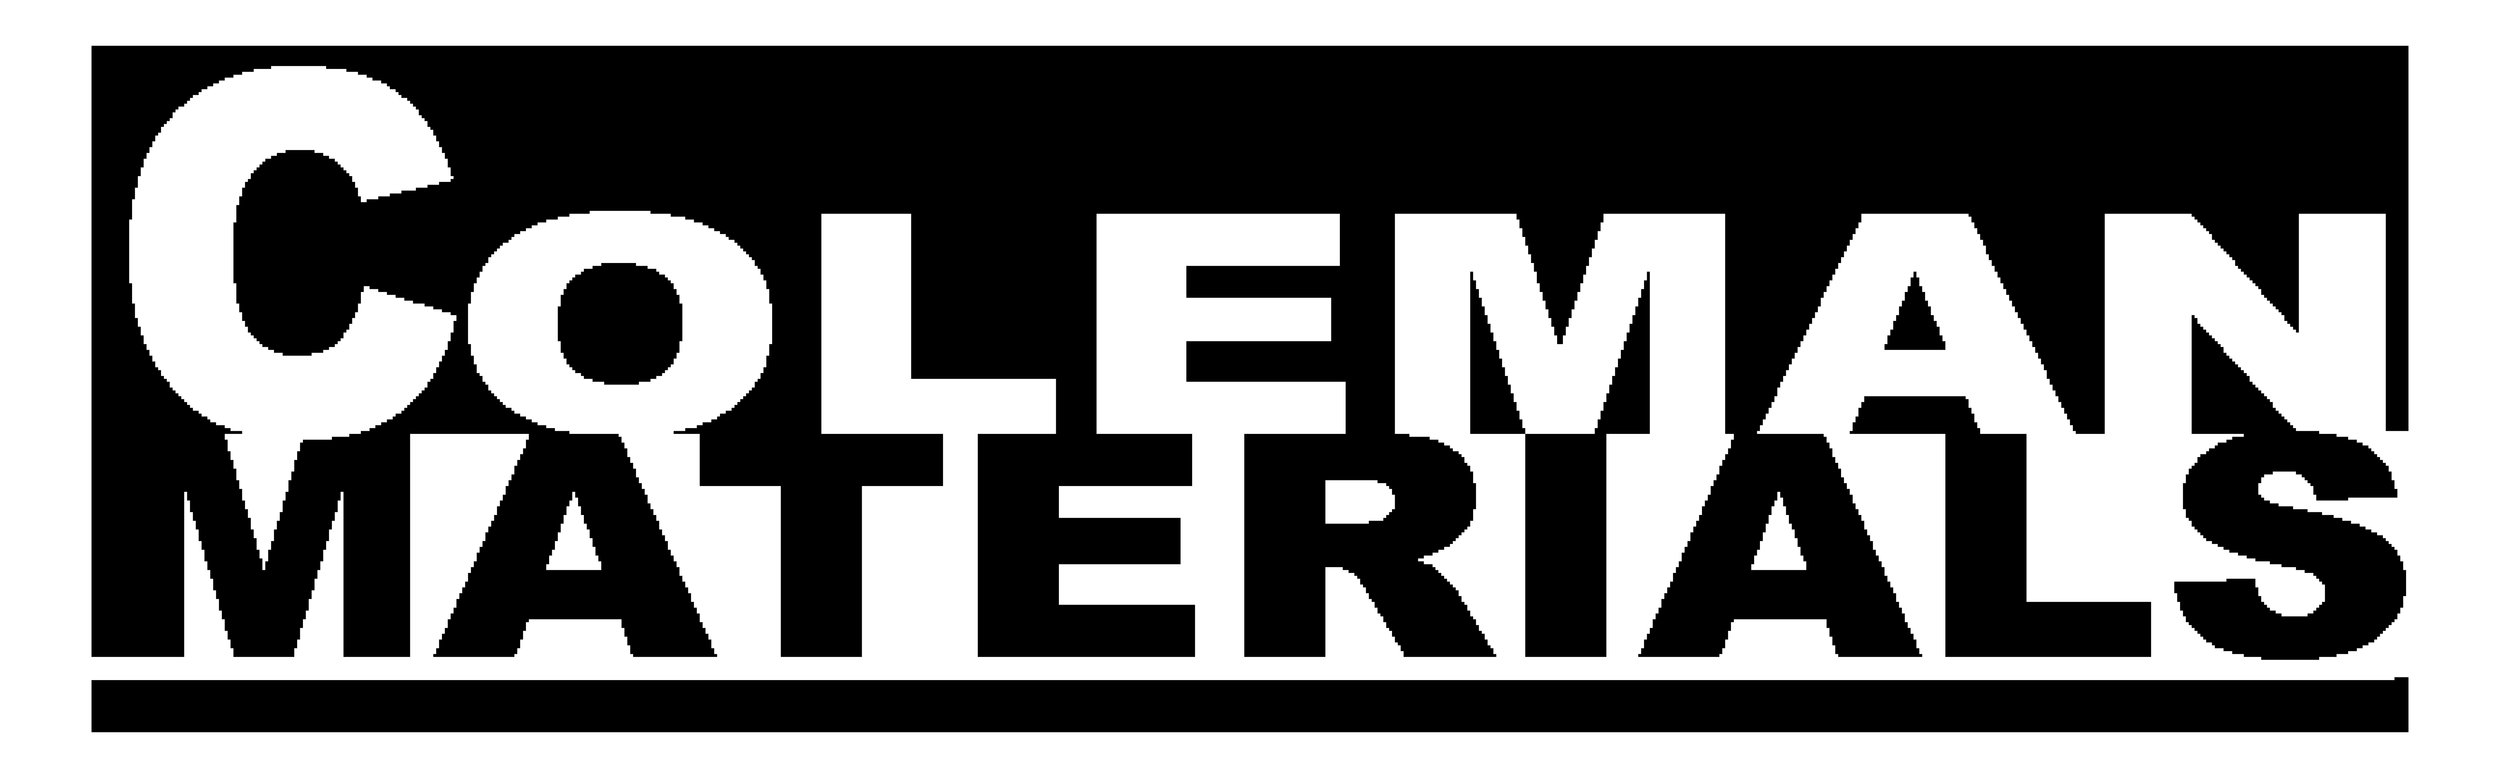 Coleman Materials Logo - Web.jpg